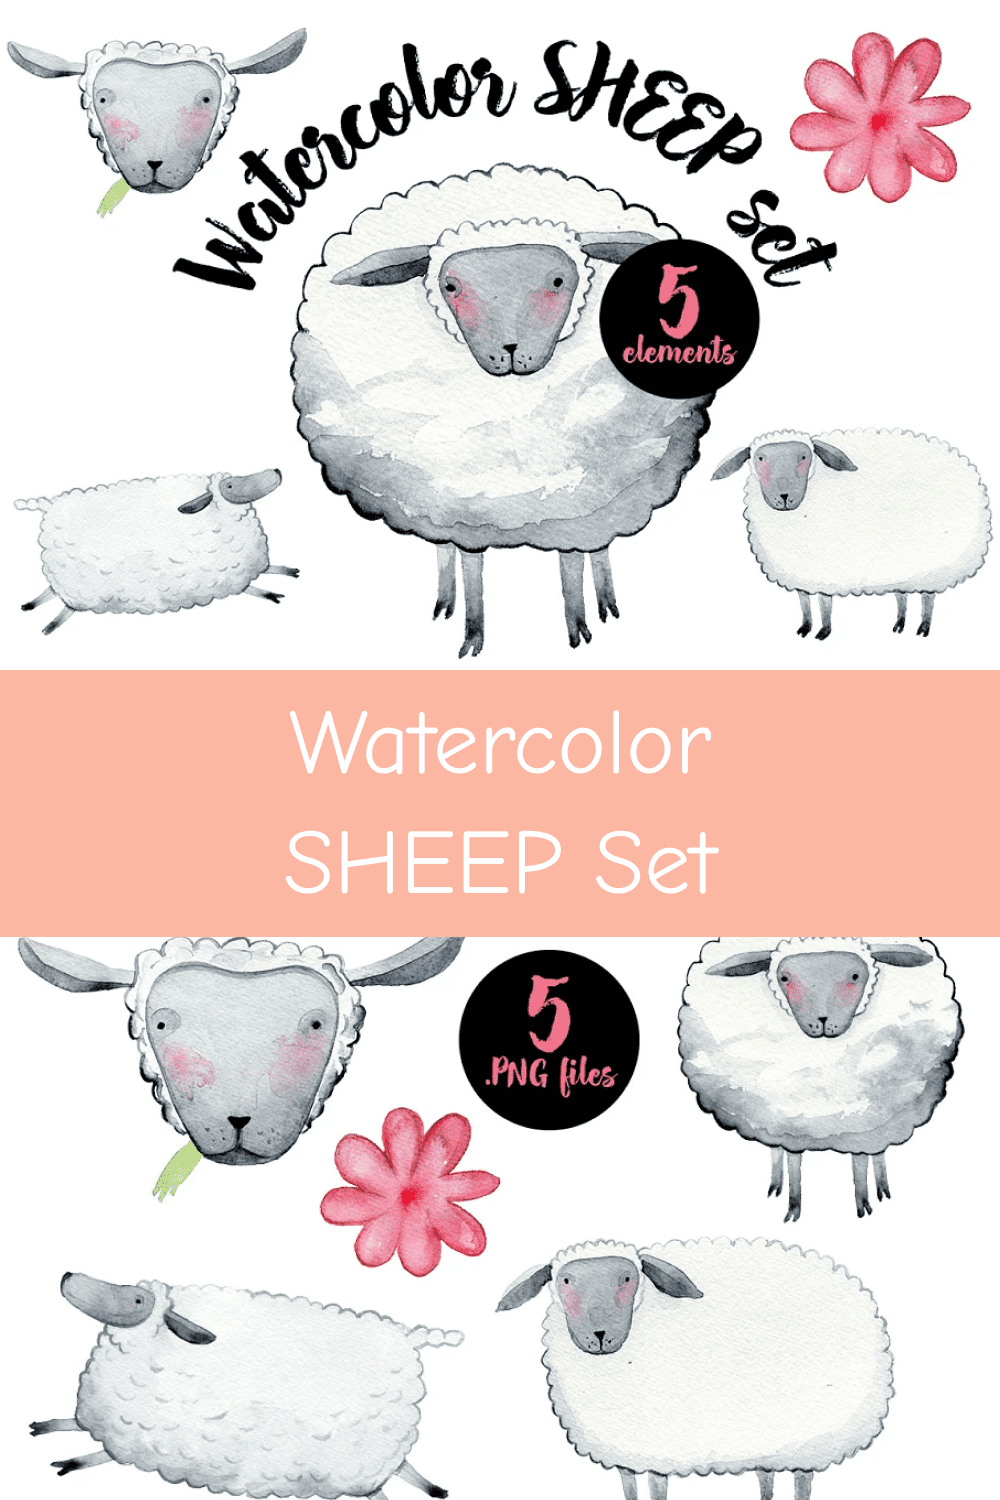 Watercolor Sheep Set.